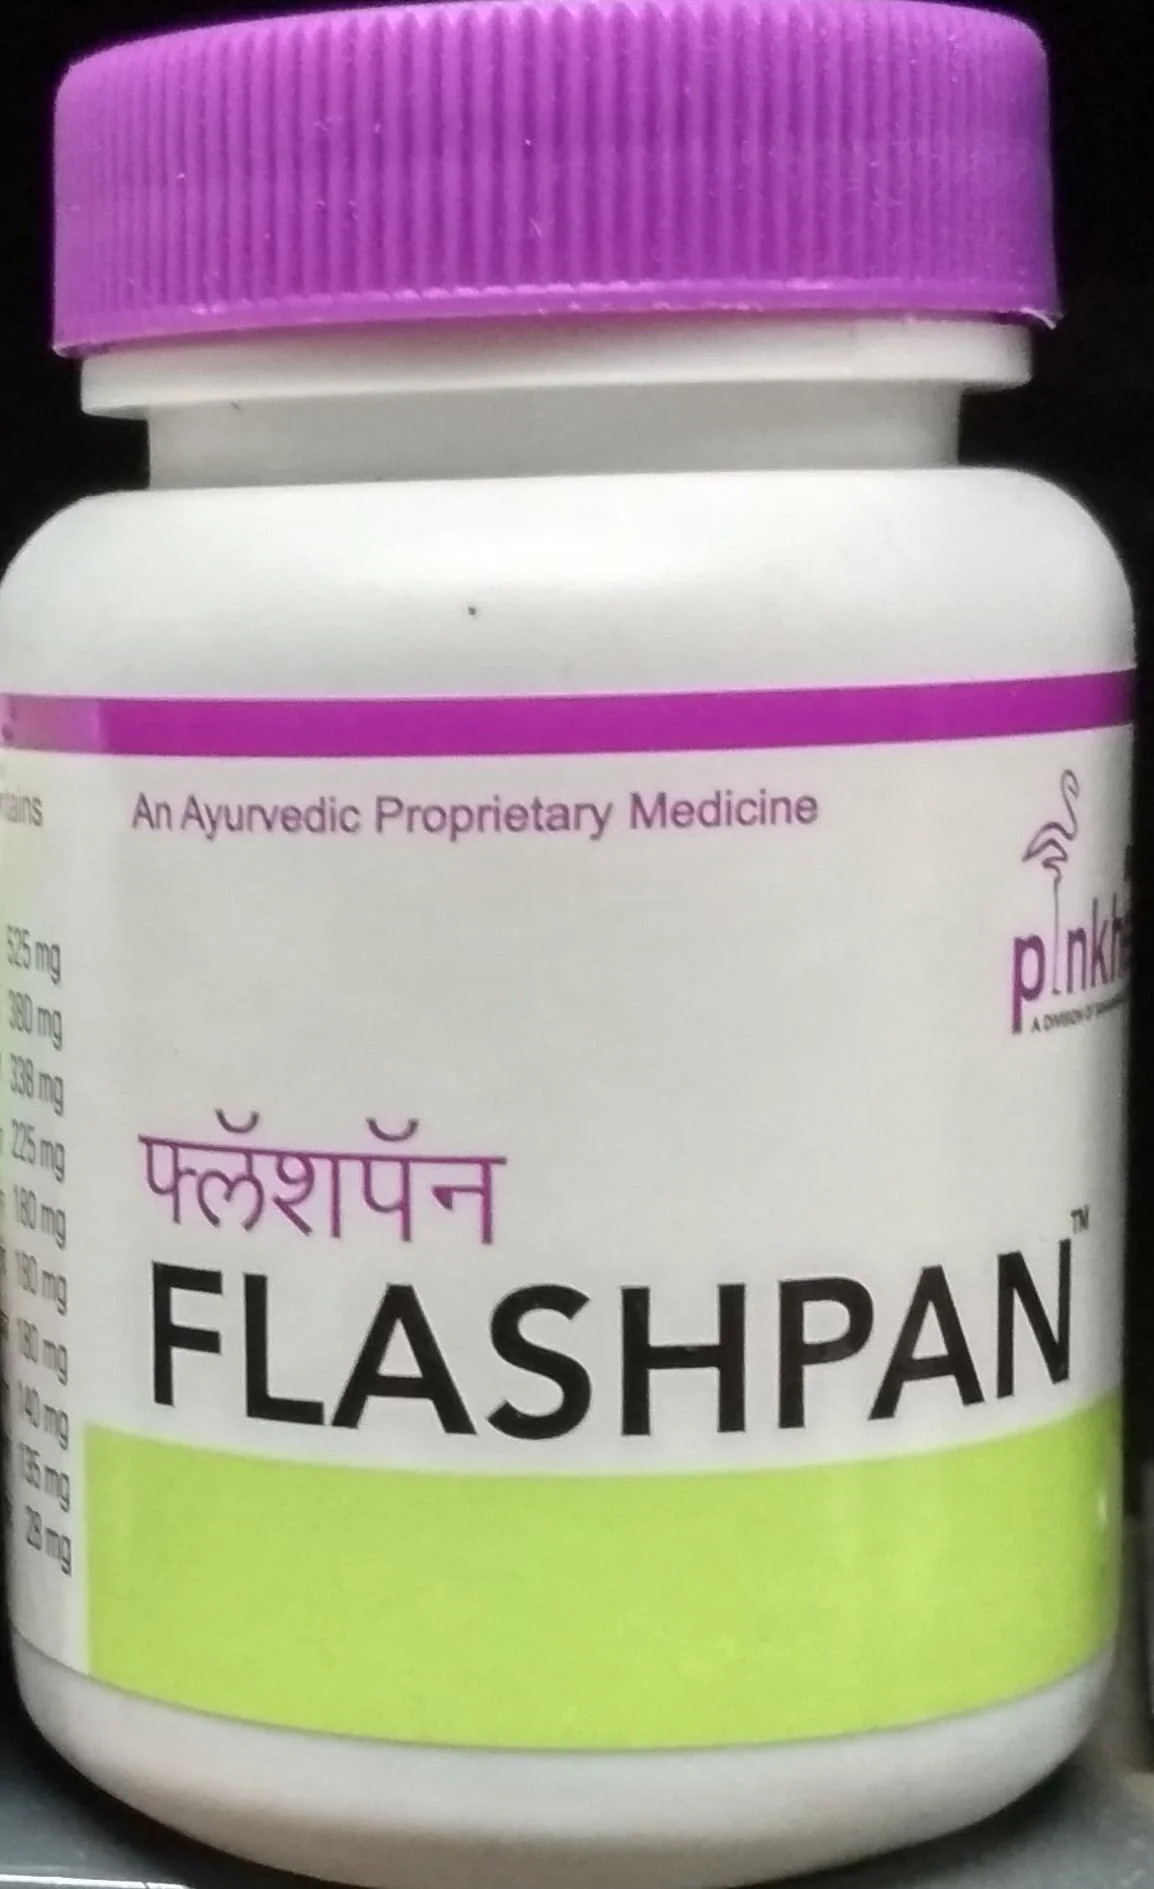 flashpan cap 30 capsule 20 % upto off pink health